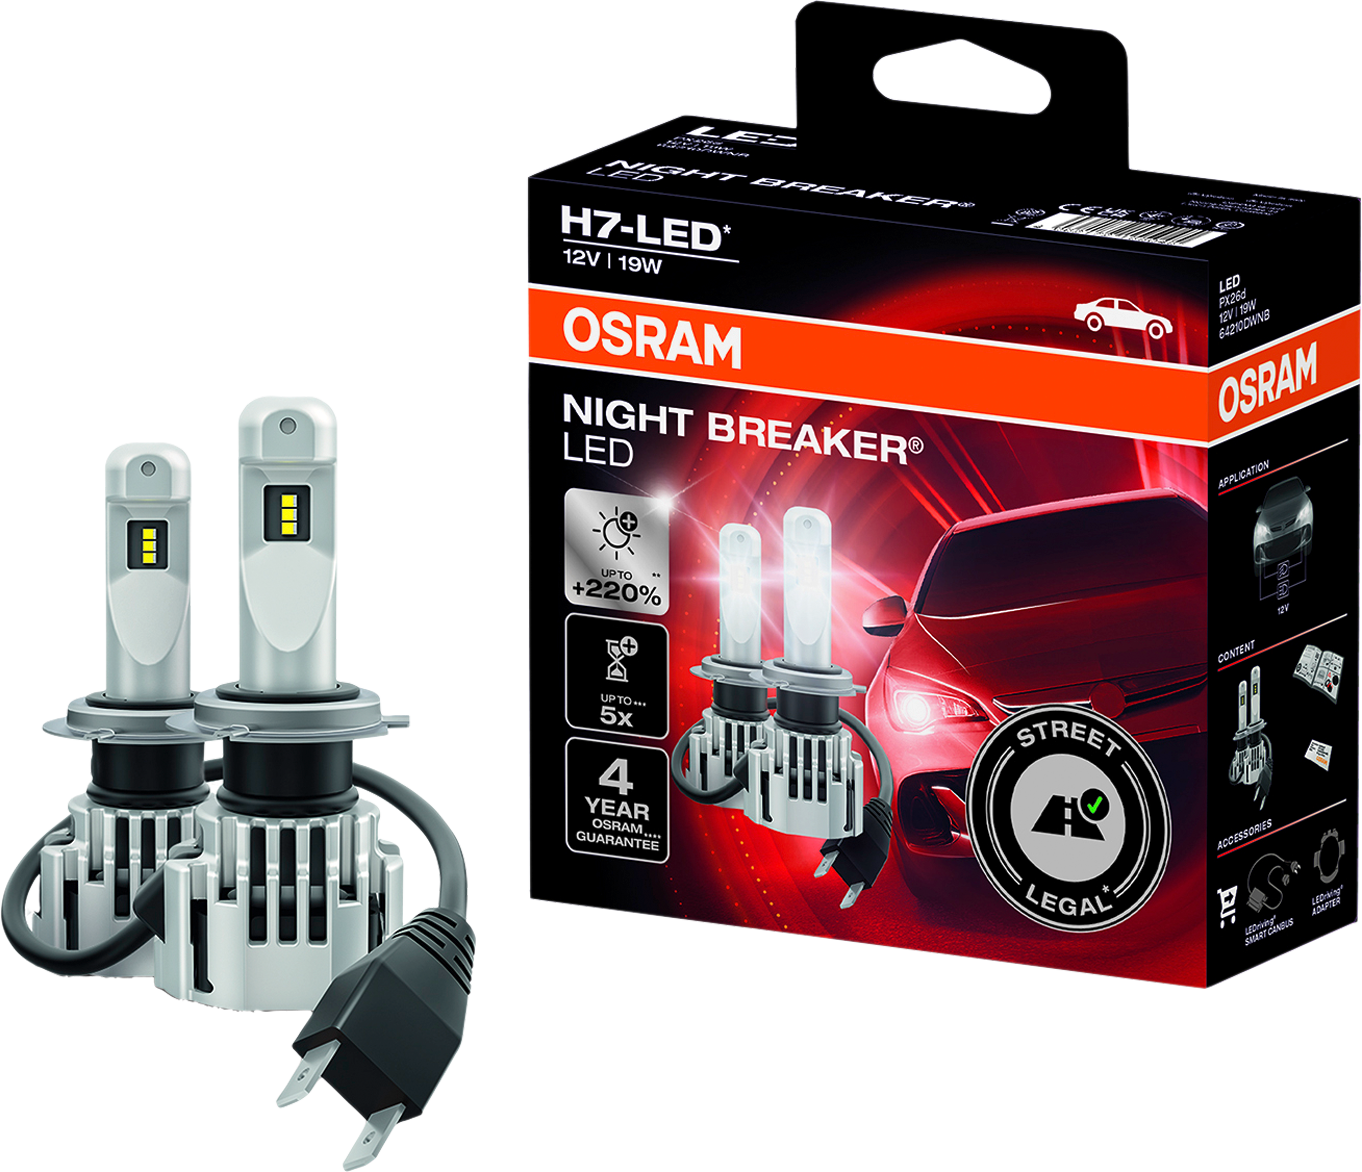 Osram NIGHT BREAKER H7 LED SET retrofit lamp order now